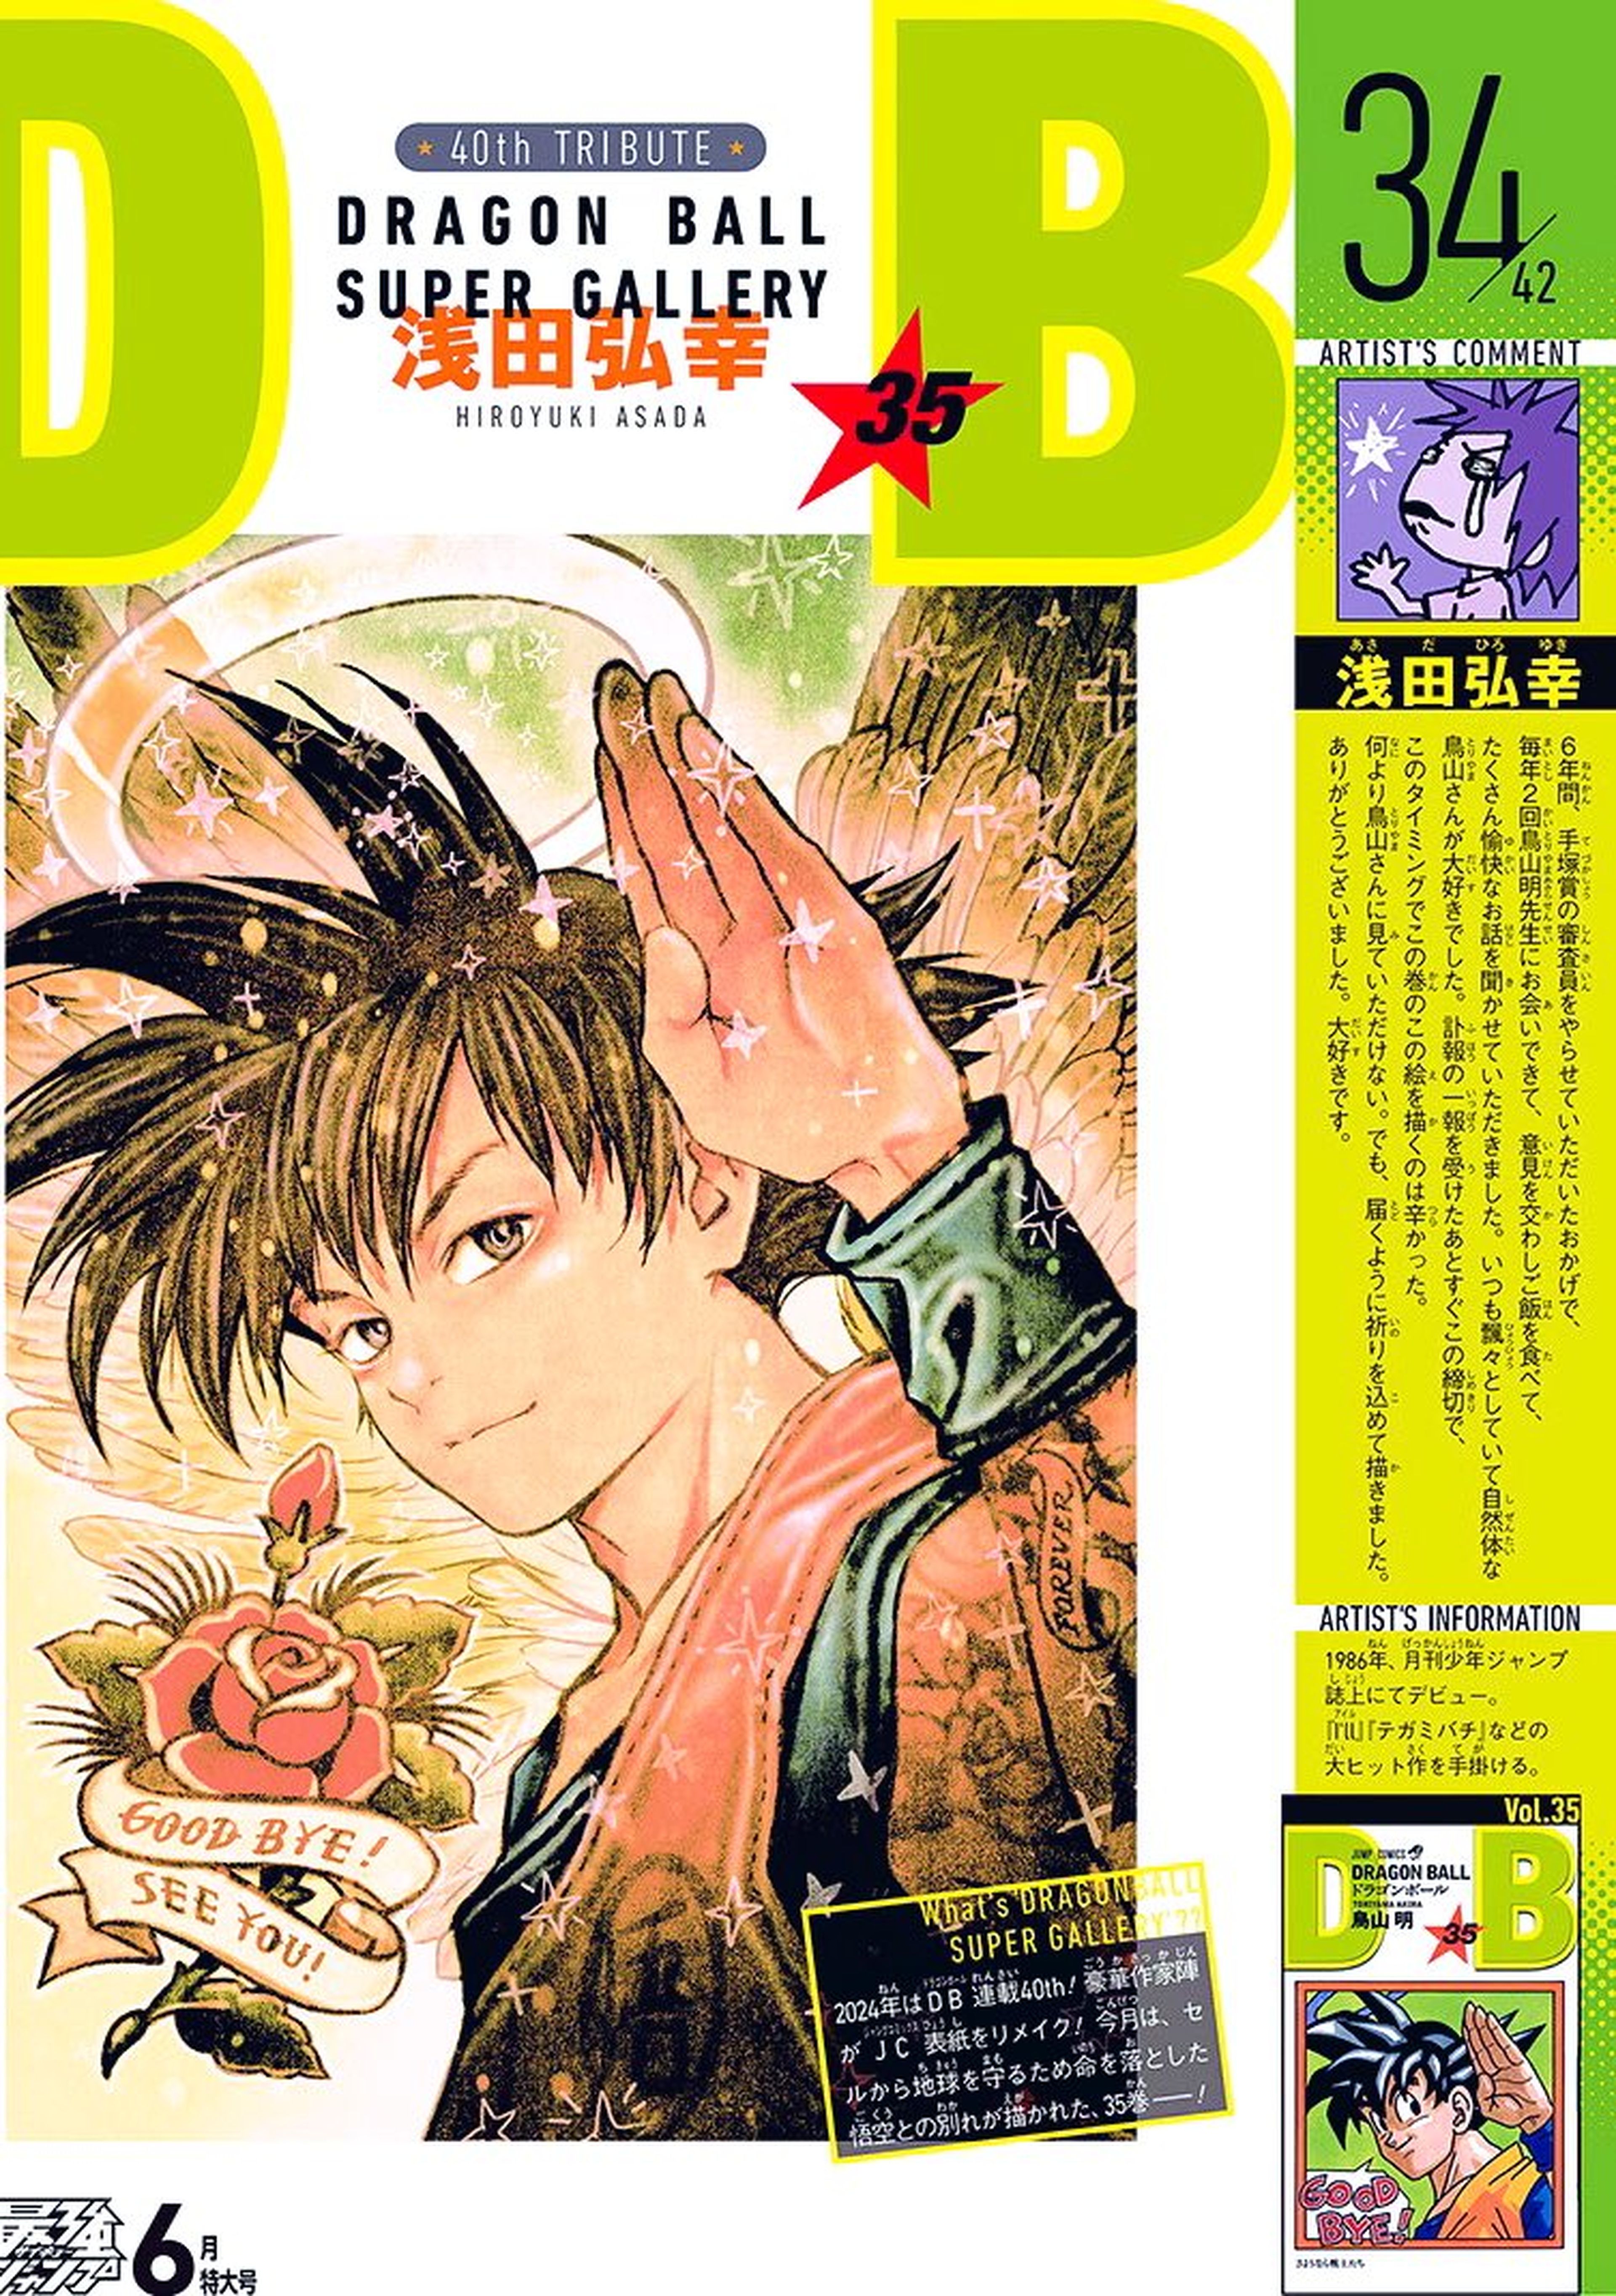 Hiroyuki Asada, autor de Letter Bee, recrea una de las portadas originales de Dragon Ball de Akira Toriyama